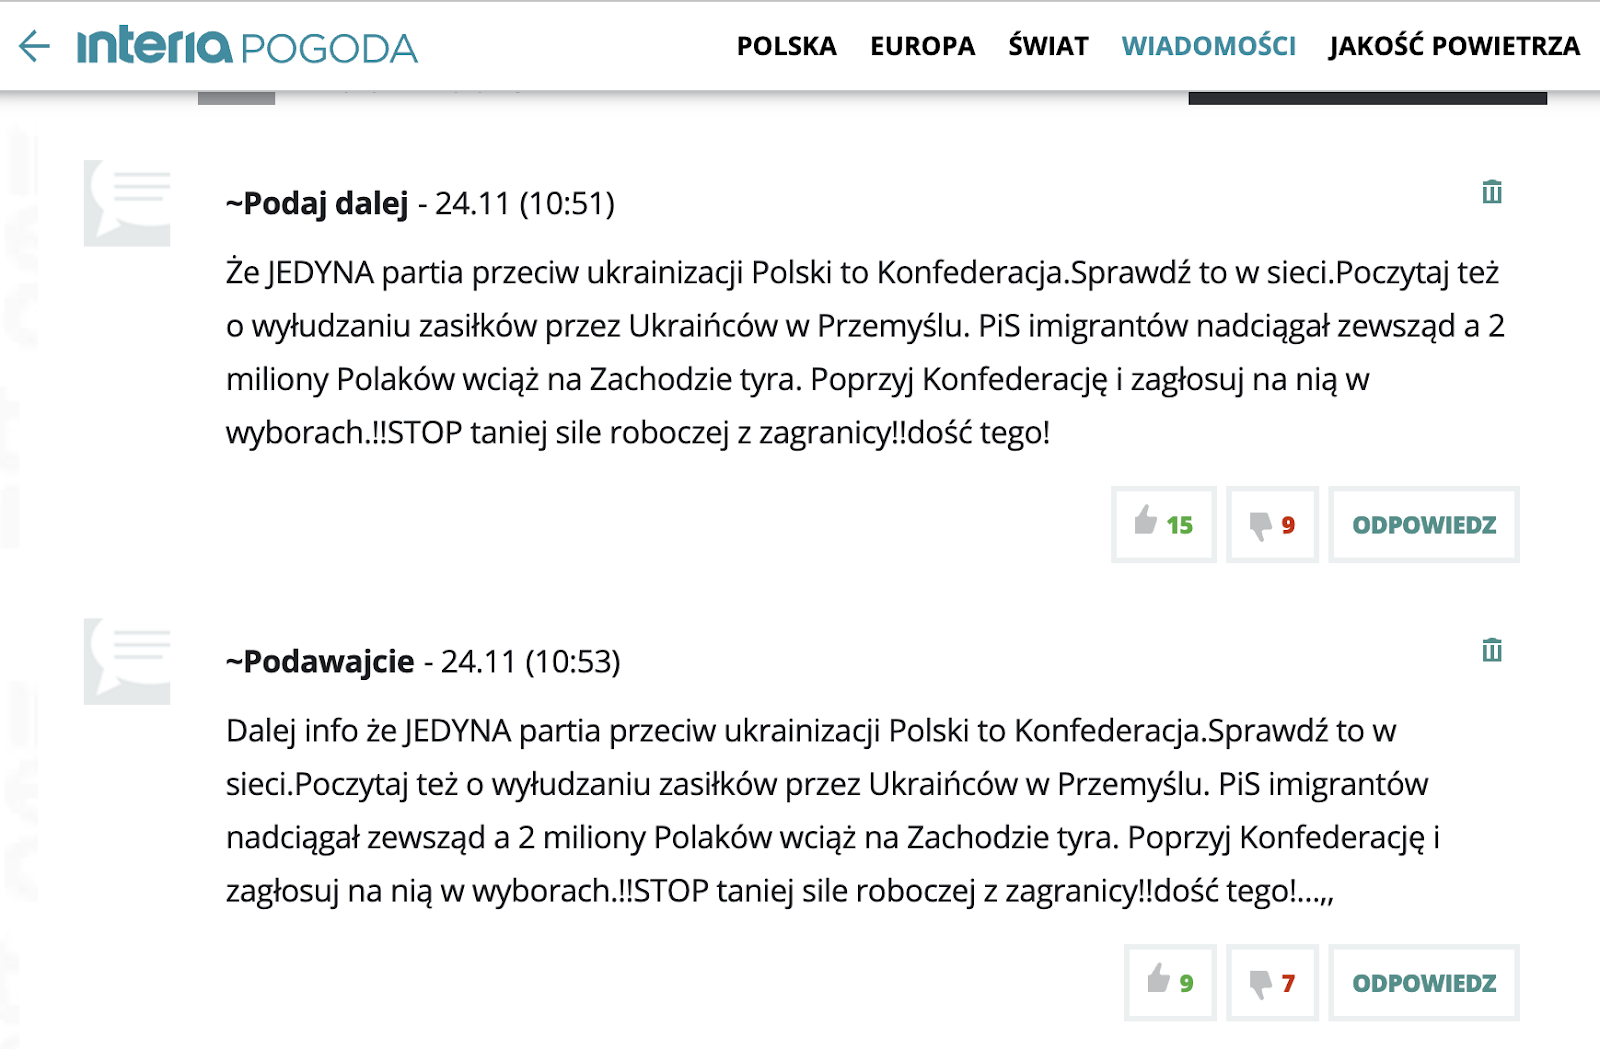 Antyukraiński komentarz w portalu Interia.pl